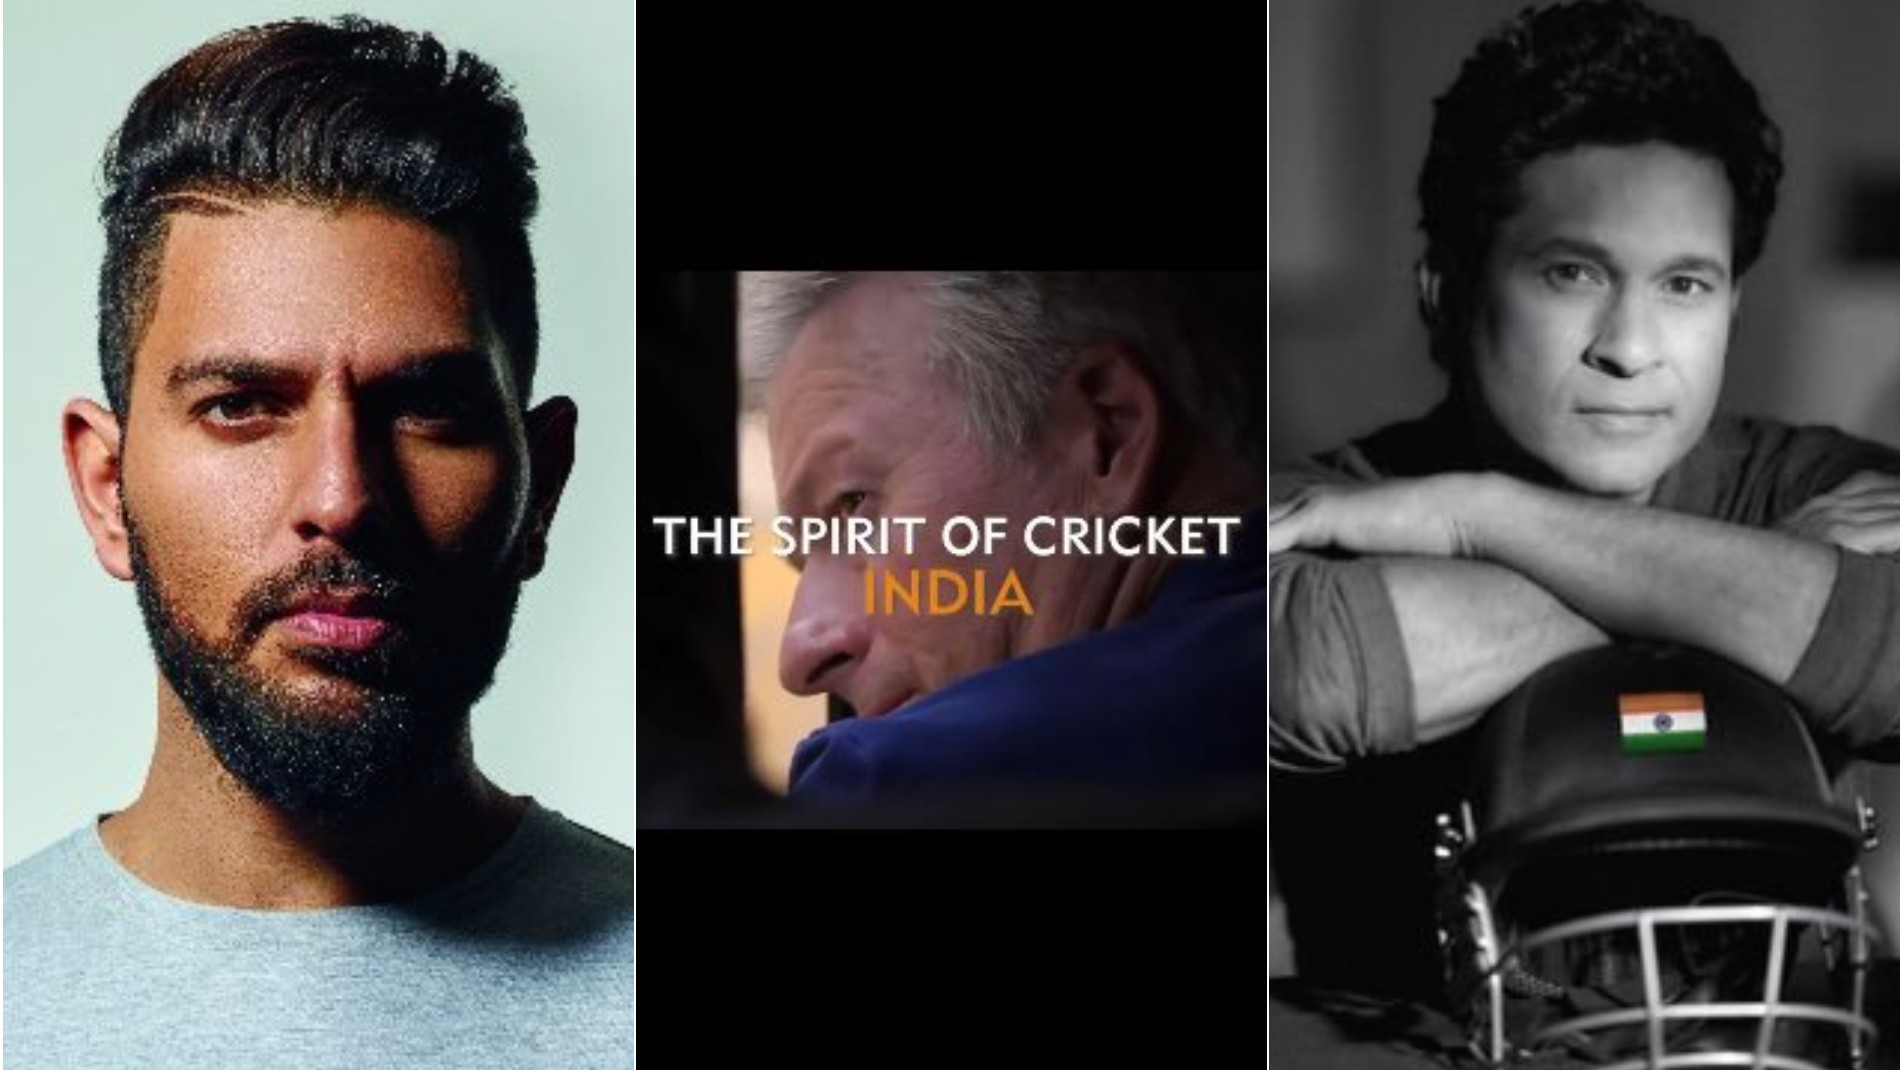 Yuvraj Singh shares Steve Waugh’s ‘Spirit of Cricket’ video; Sachin Tendulkar says he’s waiting for the book